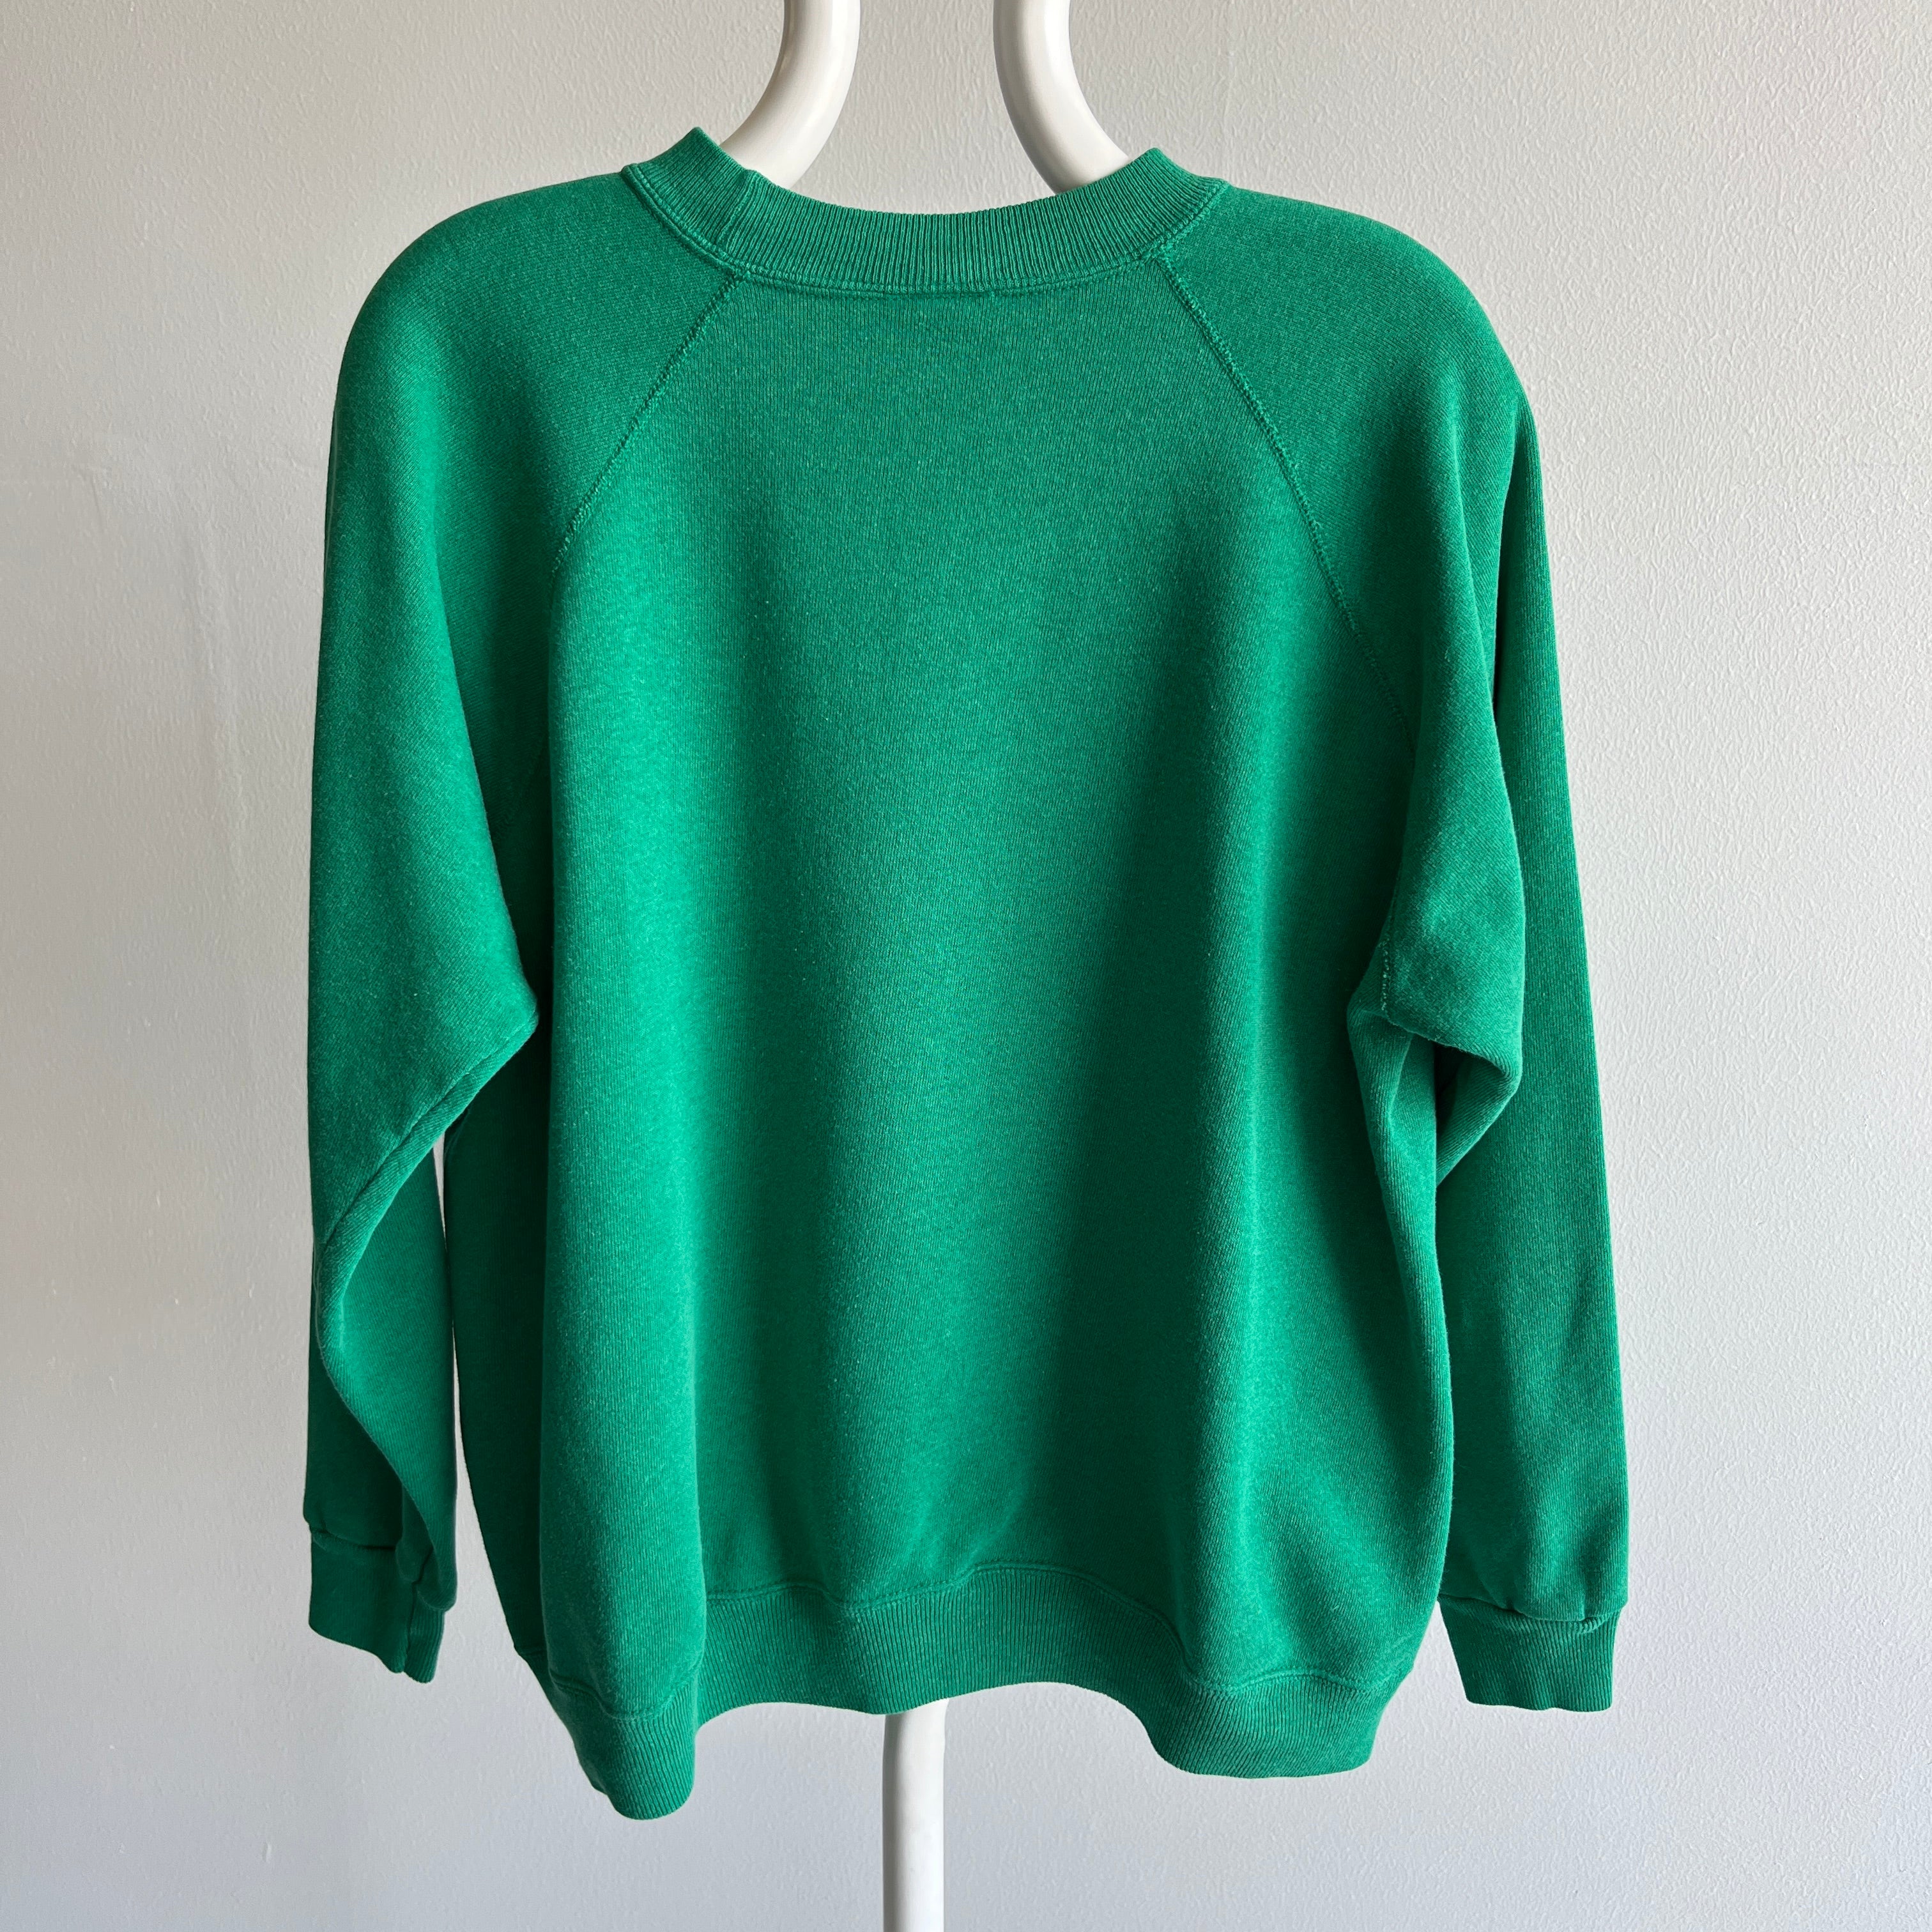 1990s Blank Faded Kelly Green Raglan Sweatshirt